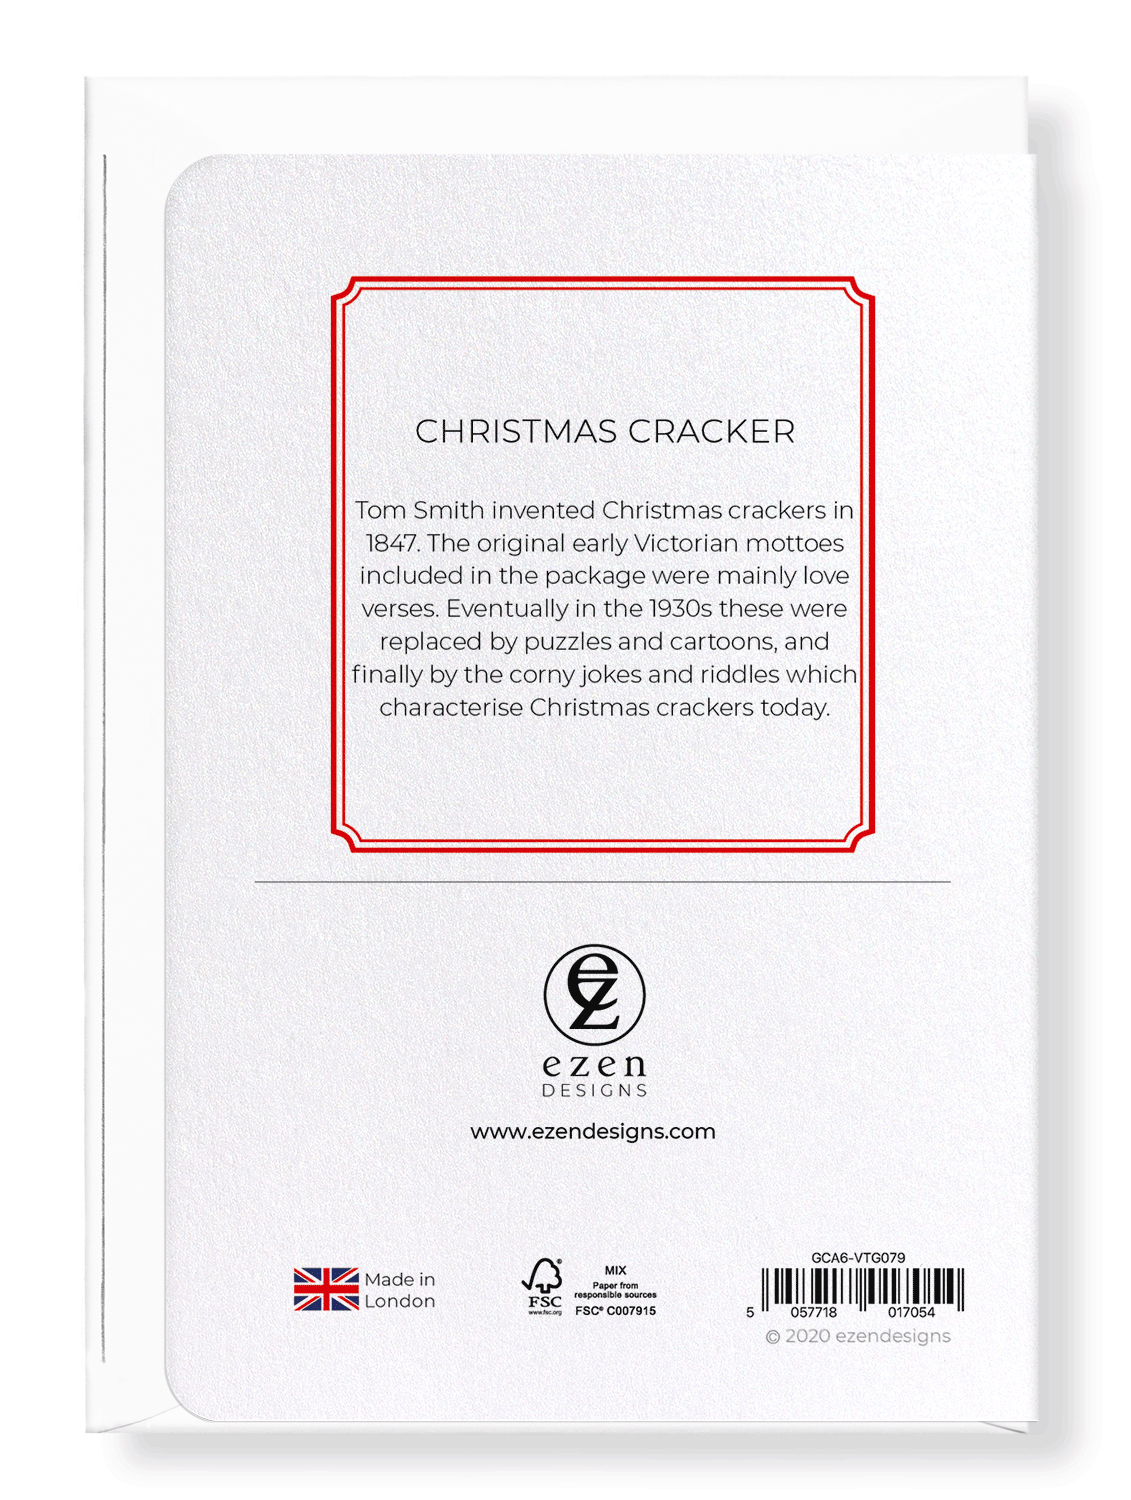 Ezen Designs - Christmas cracker - Greeting Card - Back